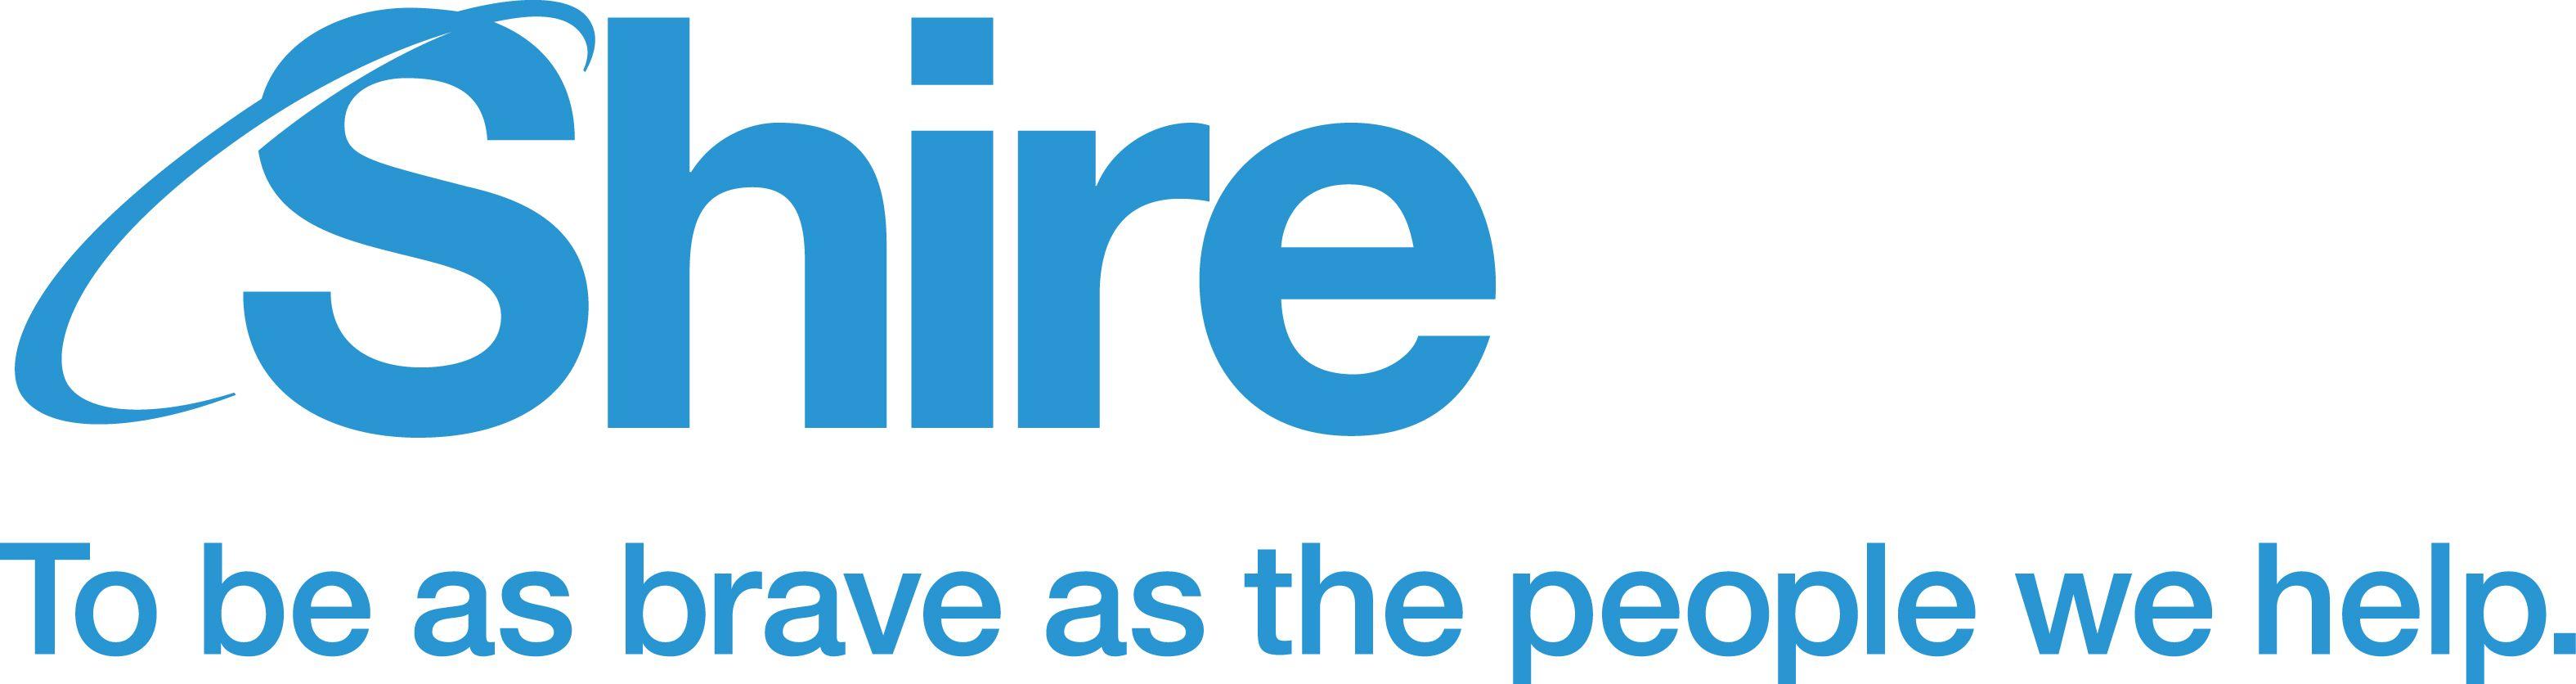 Shire Logo - Corporate Brand